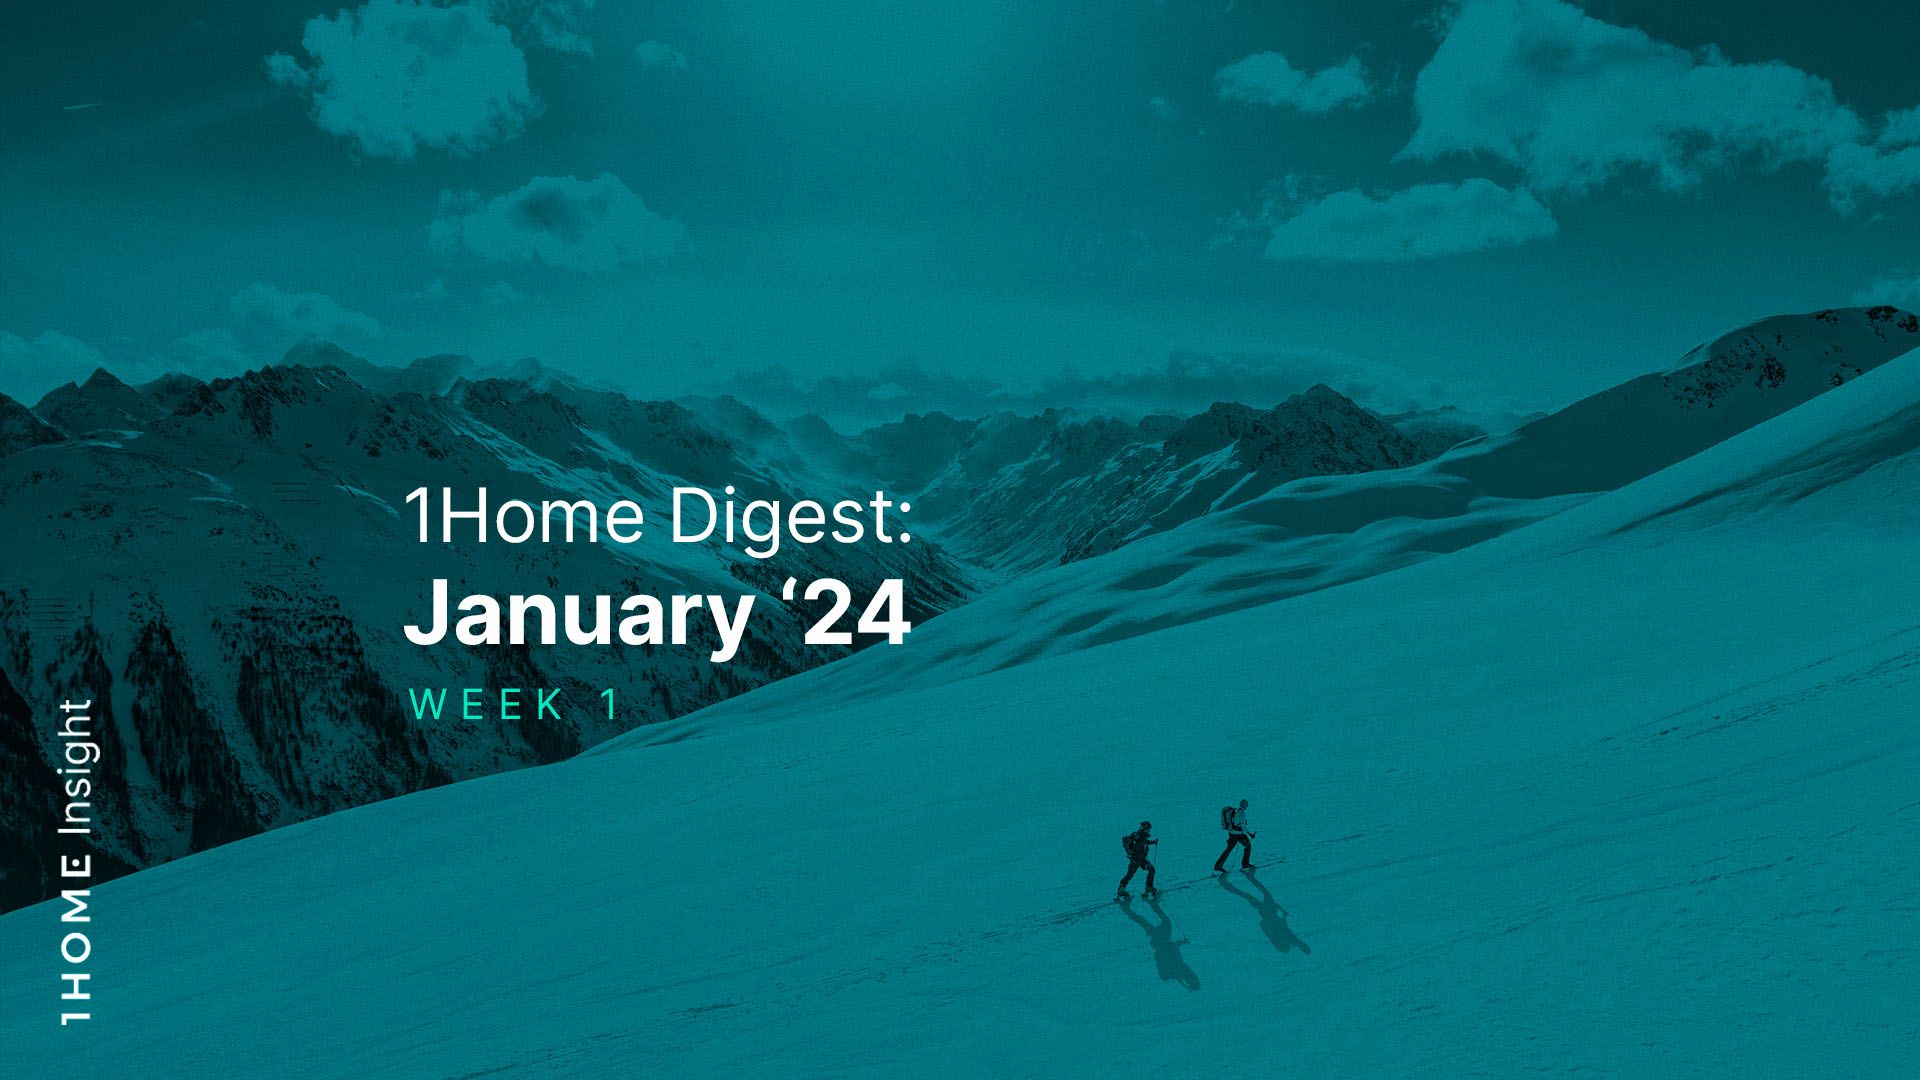 1Home Digest: January '24 - Week 1